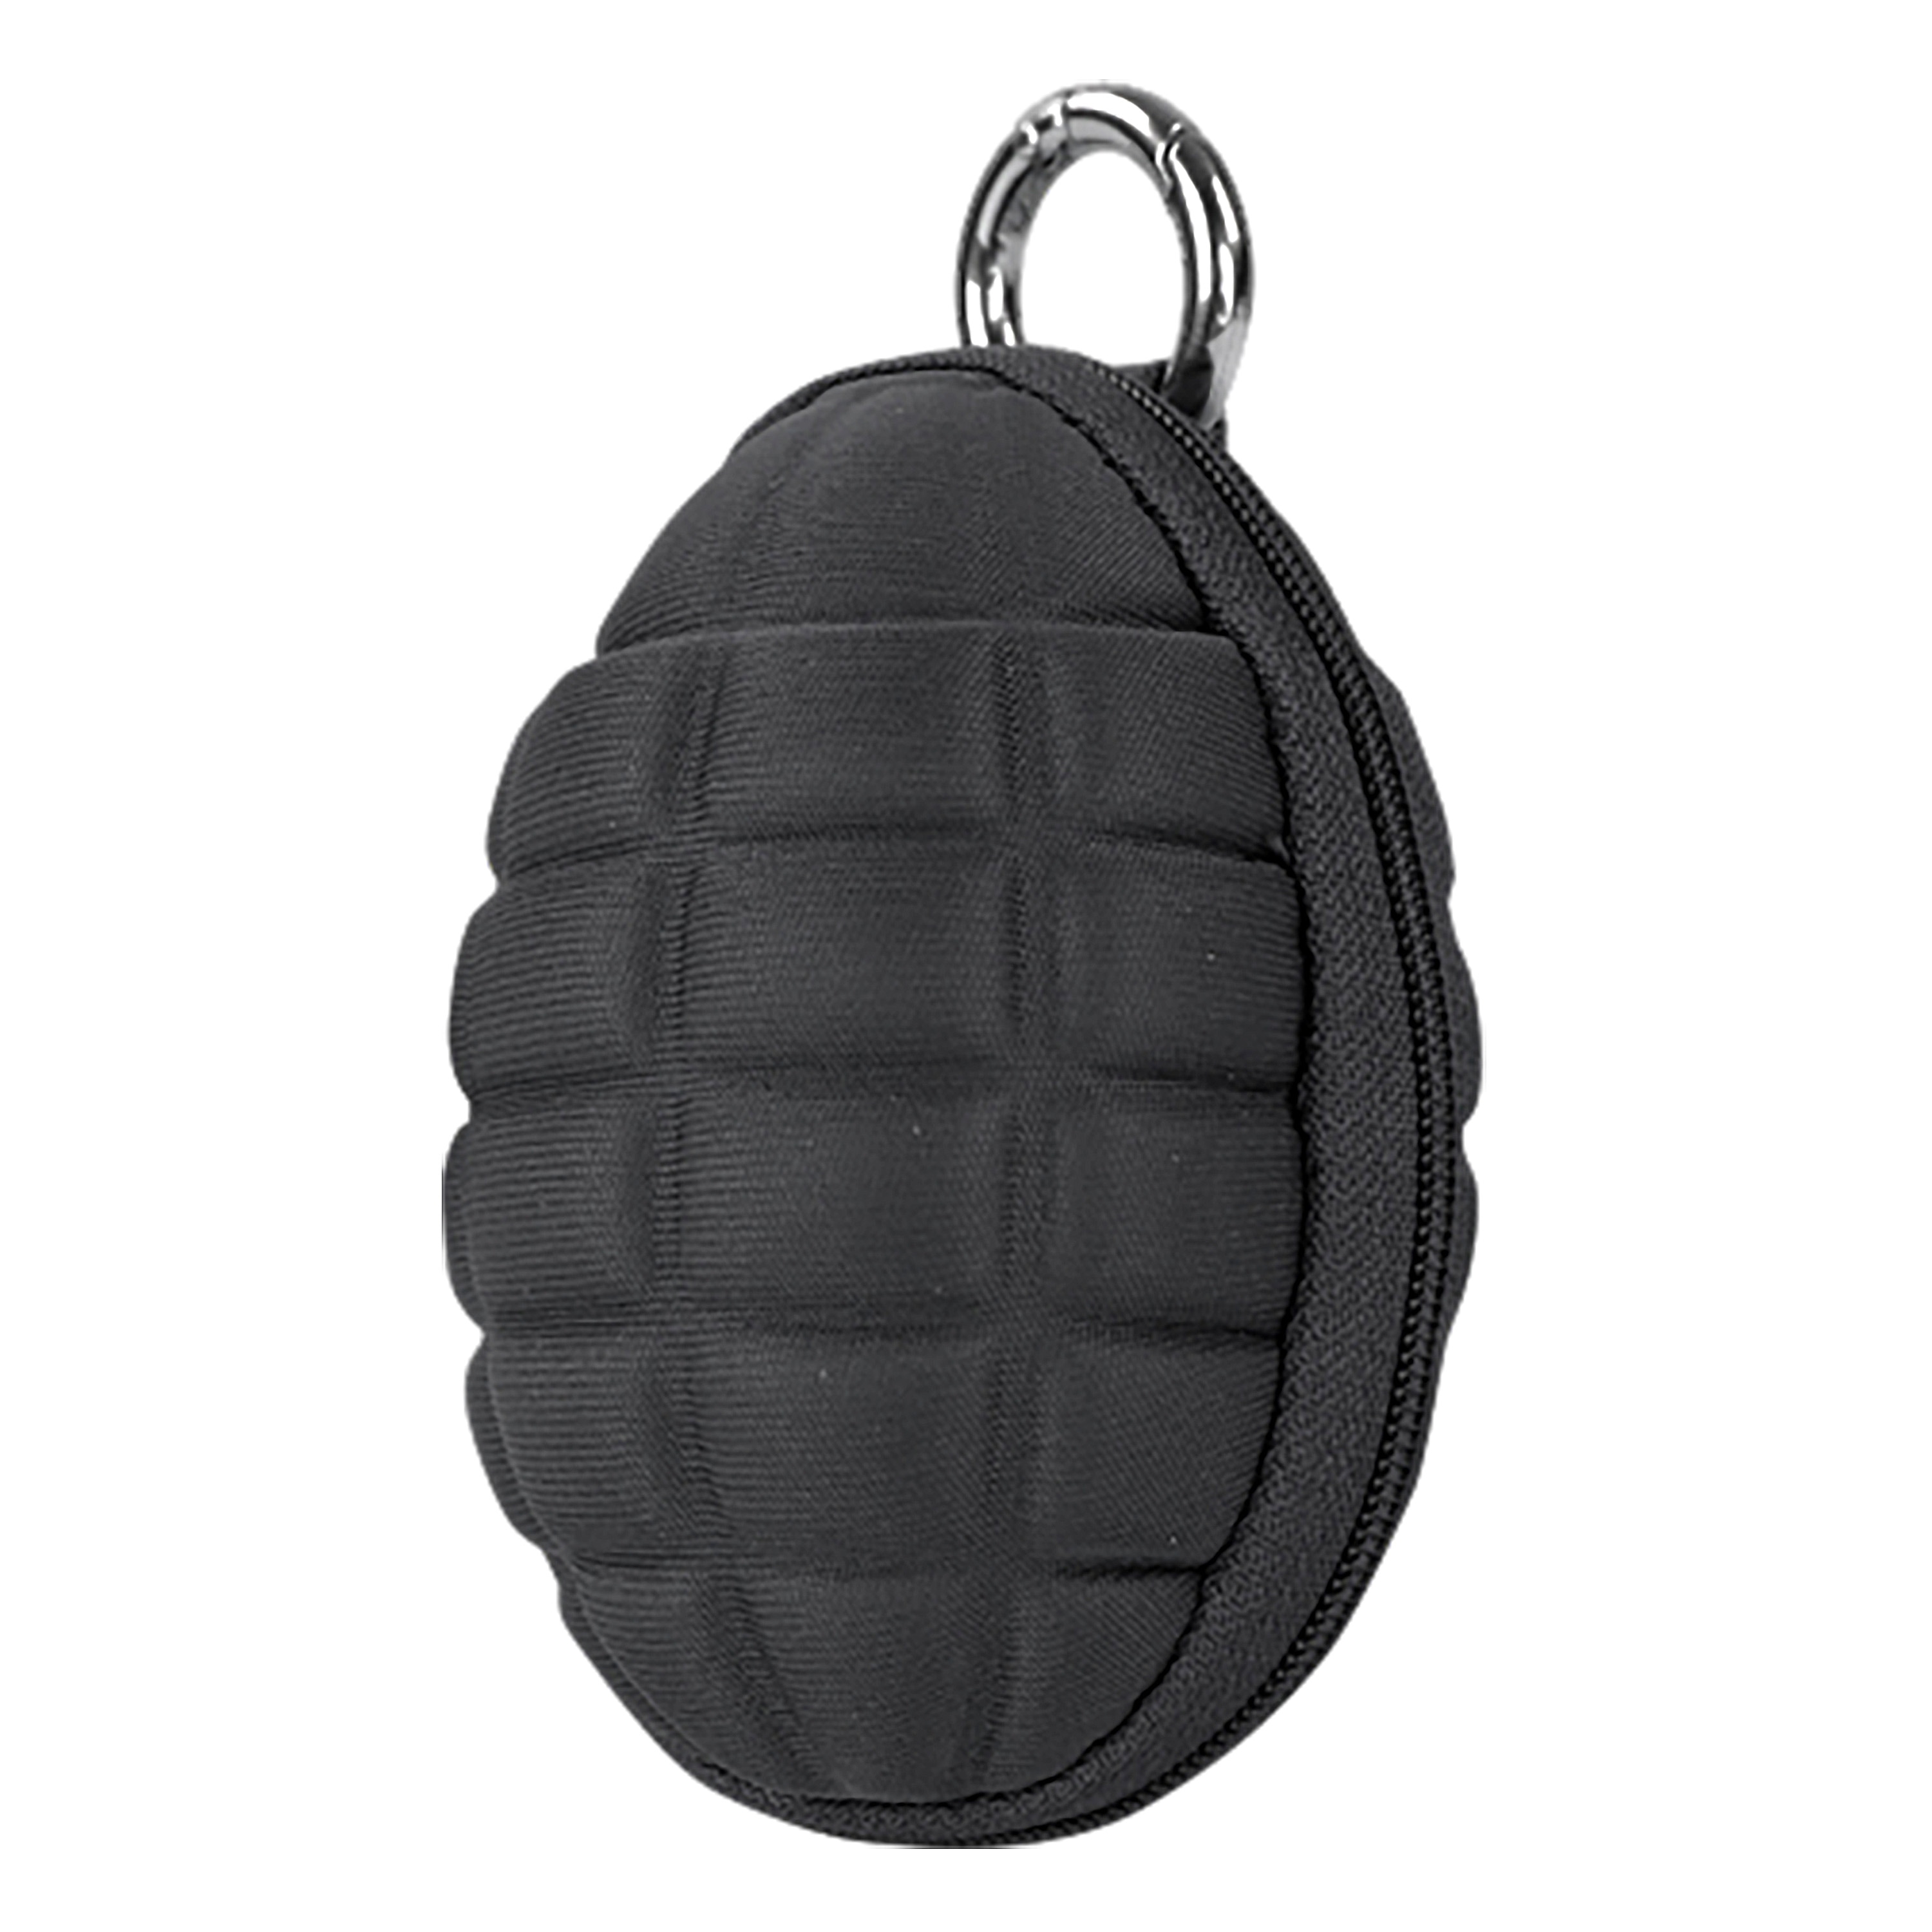 Condor Grenade Pouch Black for sale online 